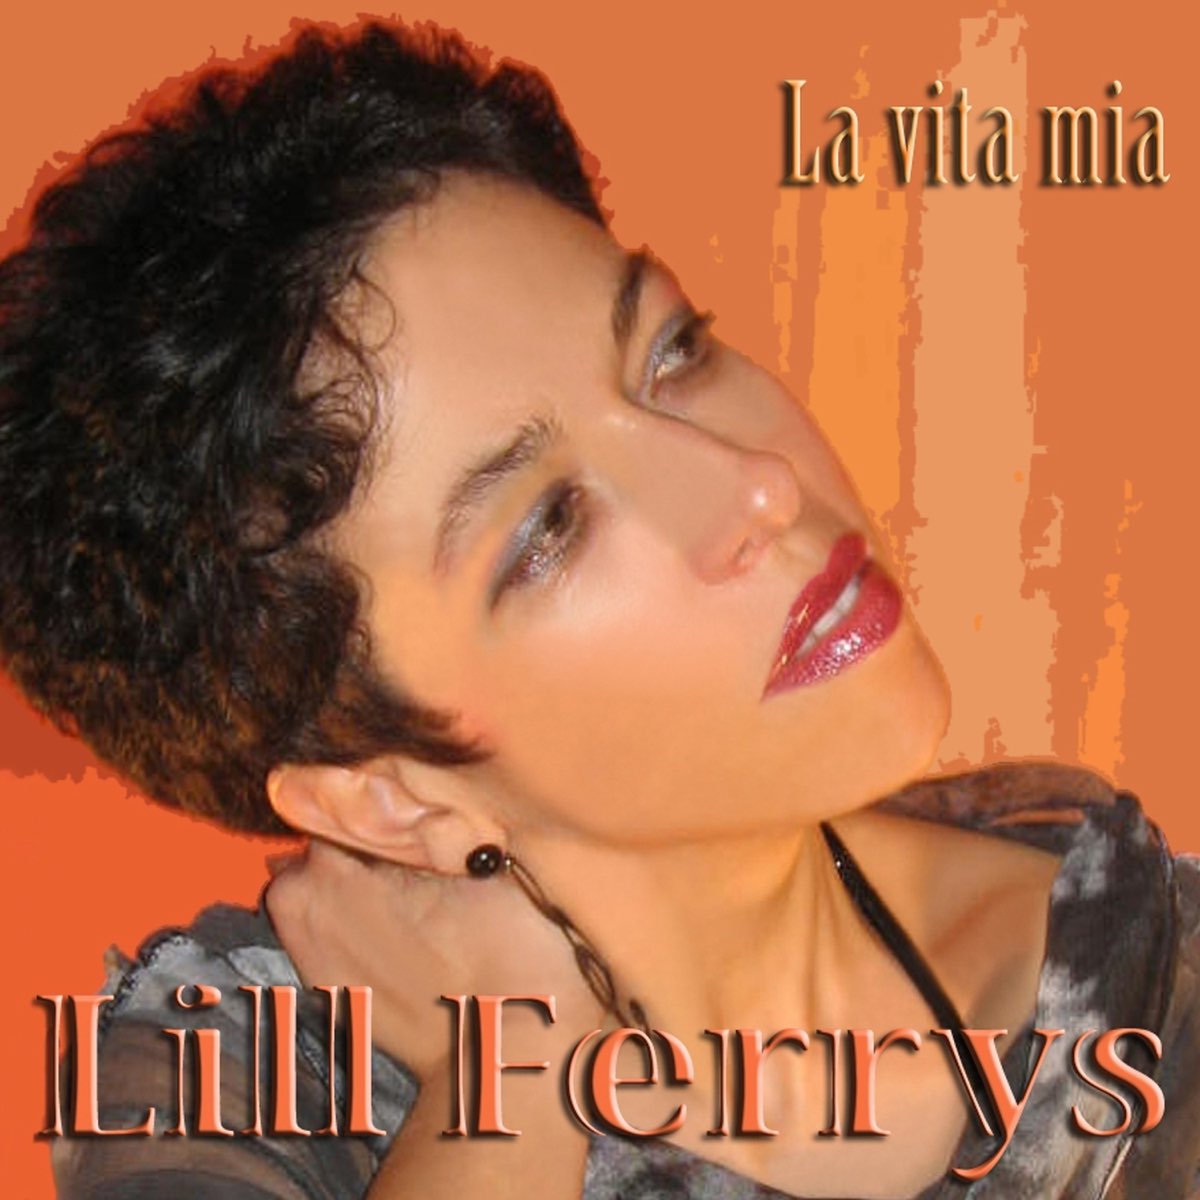 la-vita-mia-by-lill-ferrys-on-apple-music